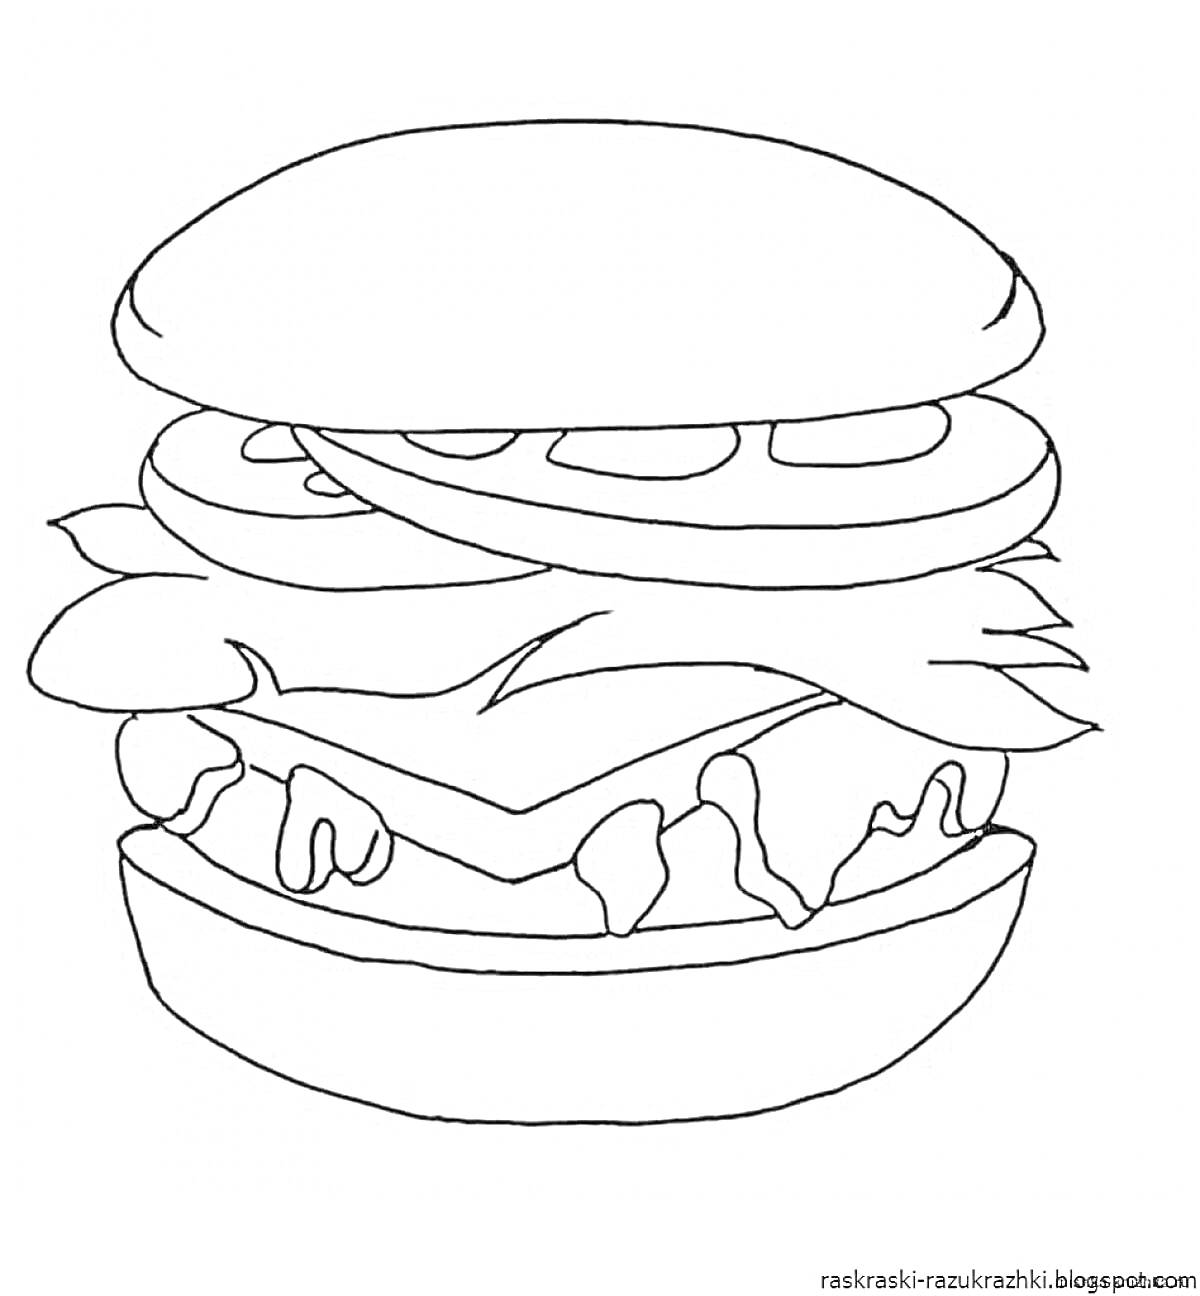 Гамбургер с листьями салата, сыром, помидорами и соусом